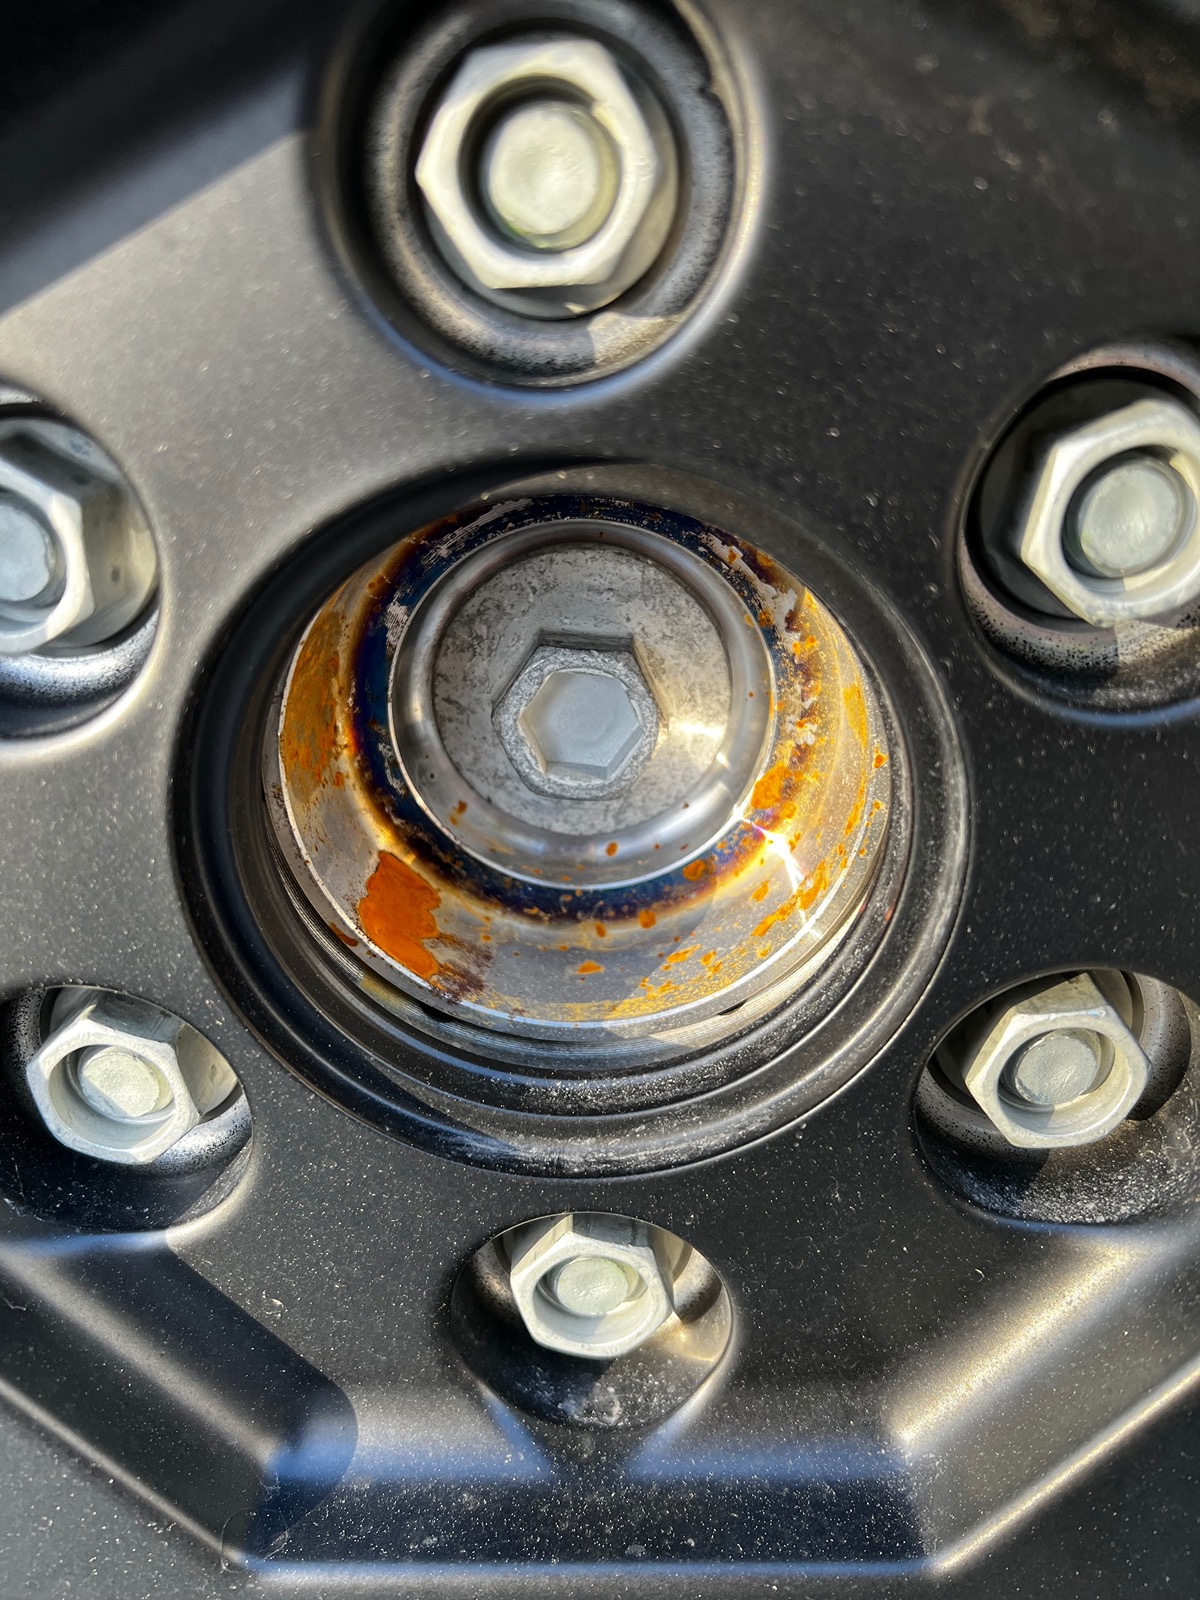 Tesla Cybertruck Rust in center of wheel hub? IMG_4248